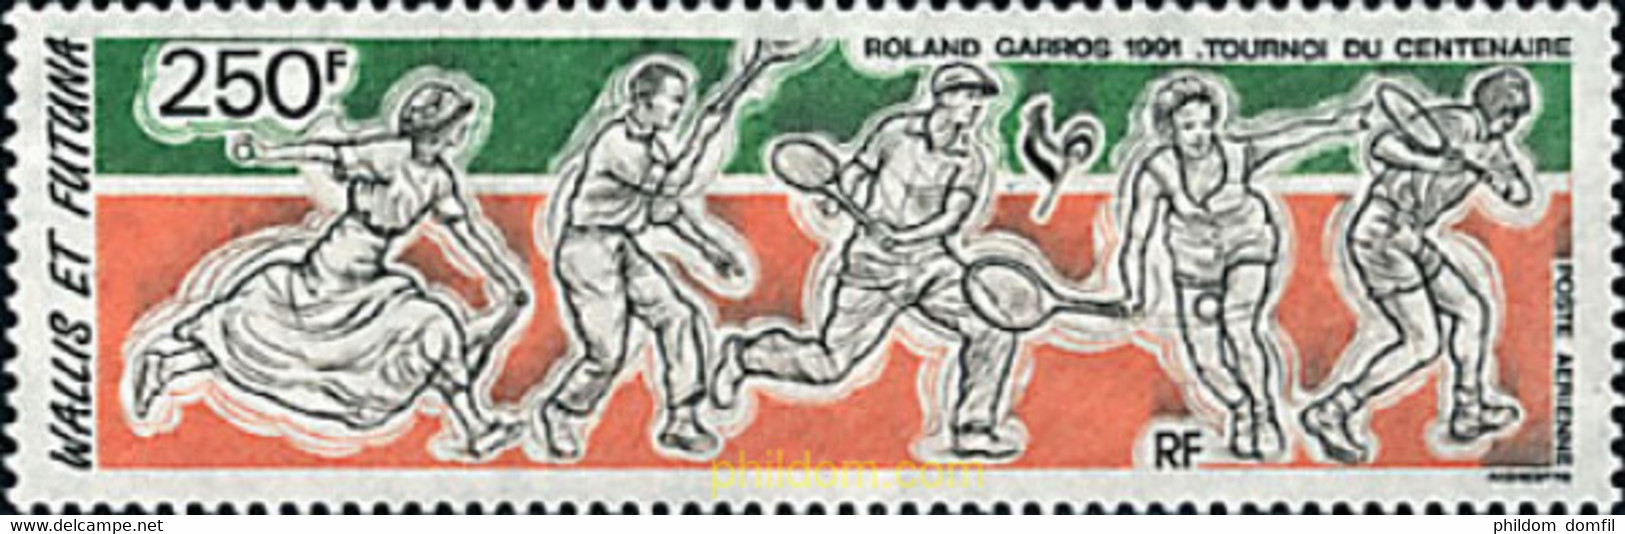 48098 MNH WALLIS Y FUTUNA 1991 ROLAND GARROS - Used Stamps